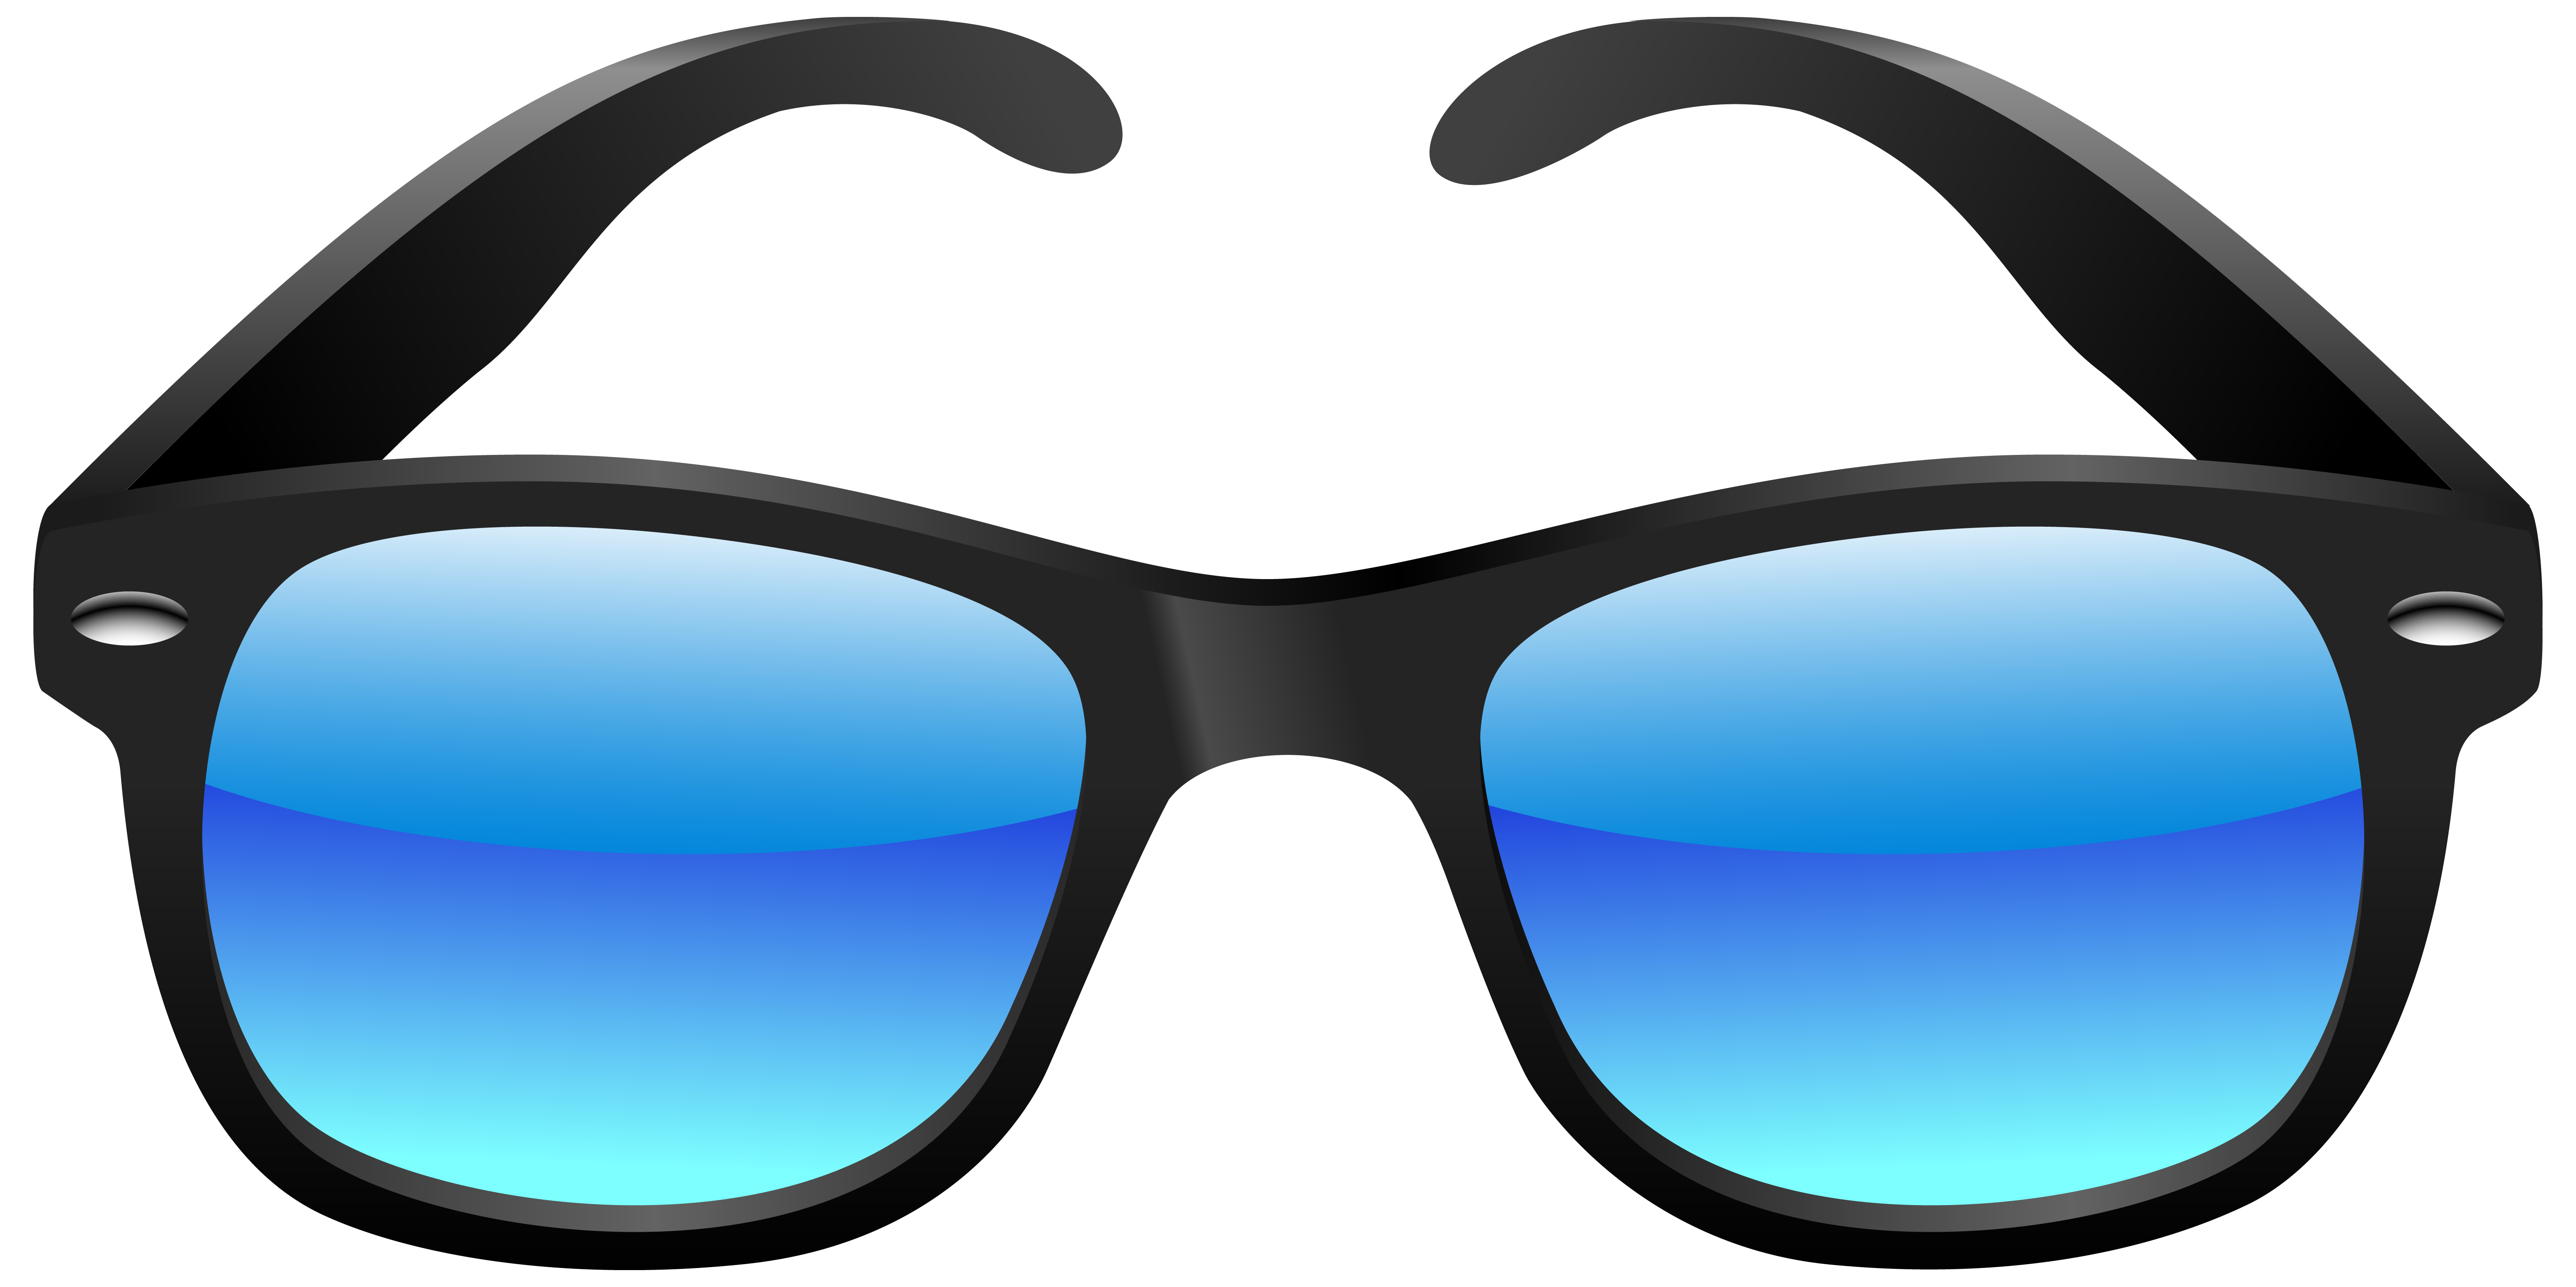 Clip art of sunglasses clipart clipartwiz